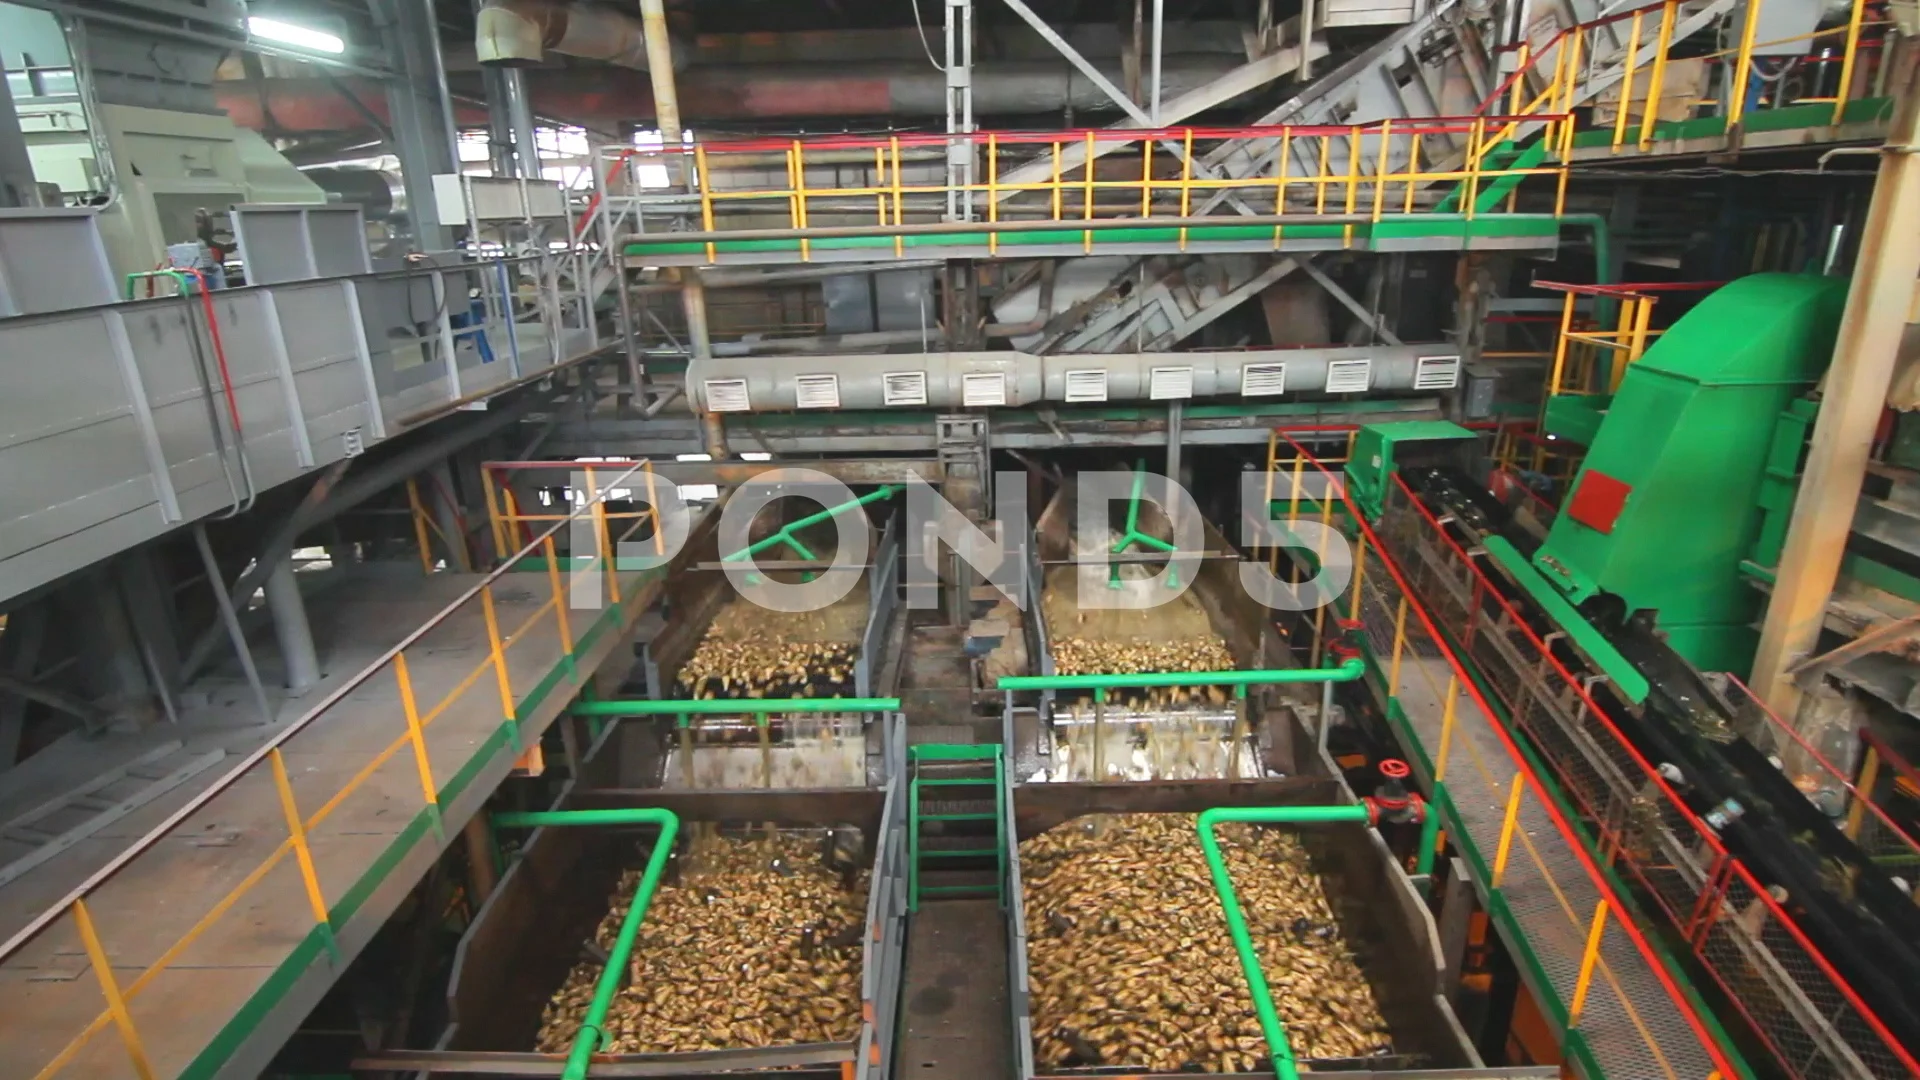 sugar factory process